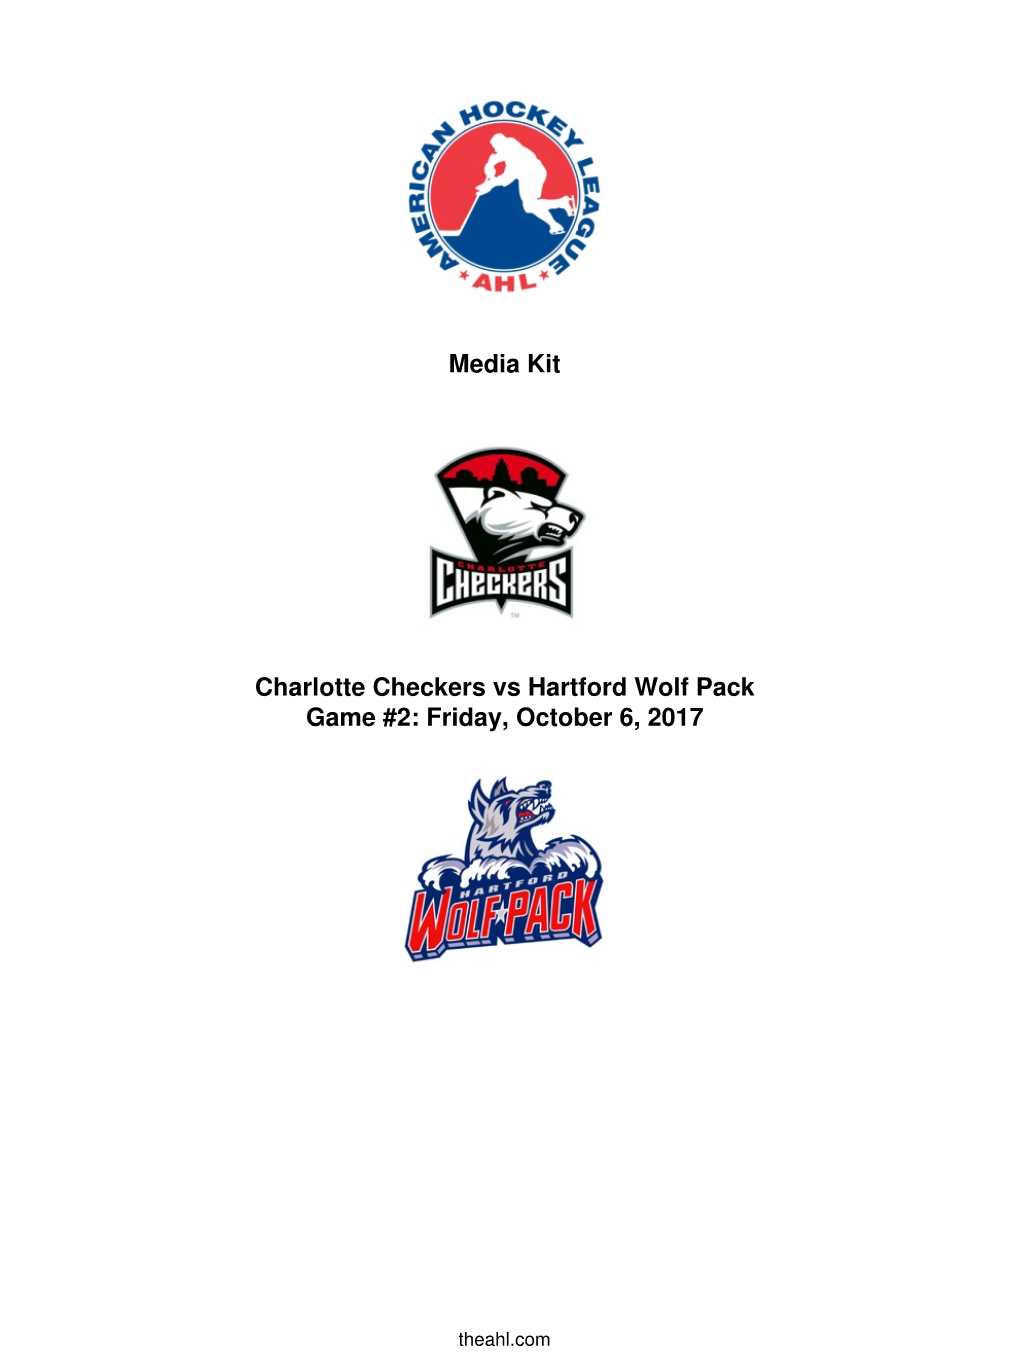 Media Kit Charlotte Checkers Vs Hartford Wolf Pack Game #2: Friday